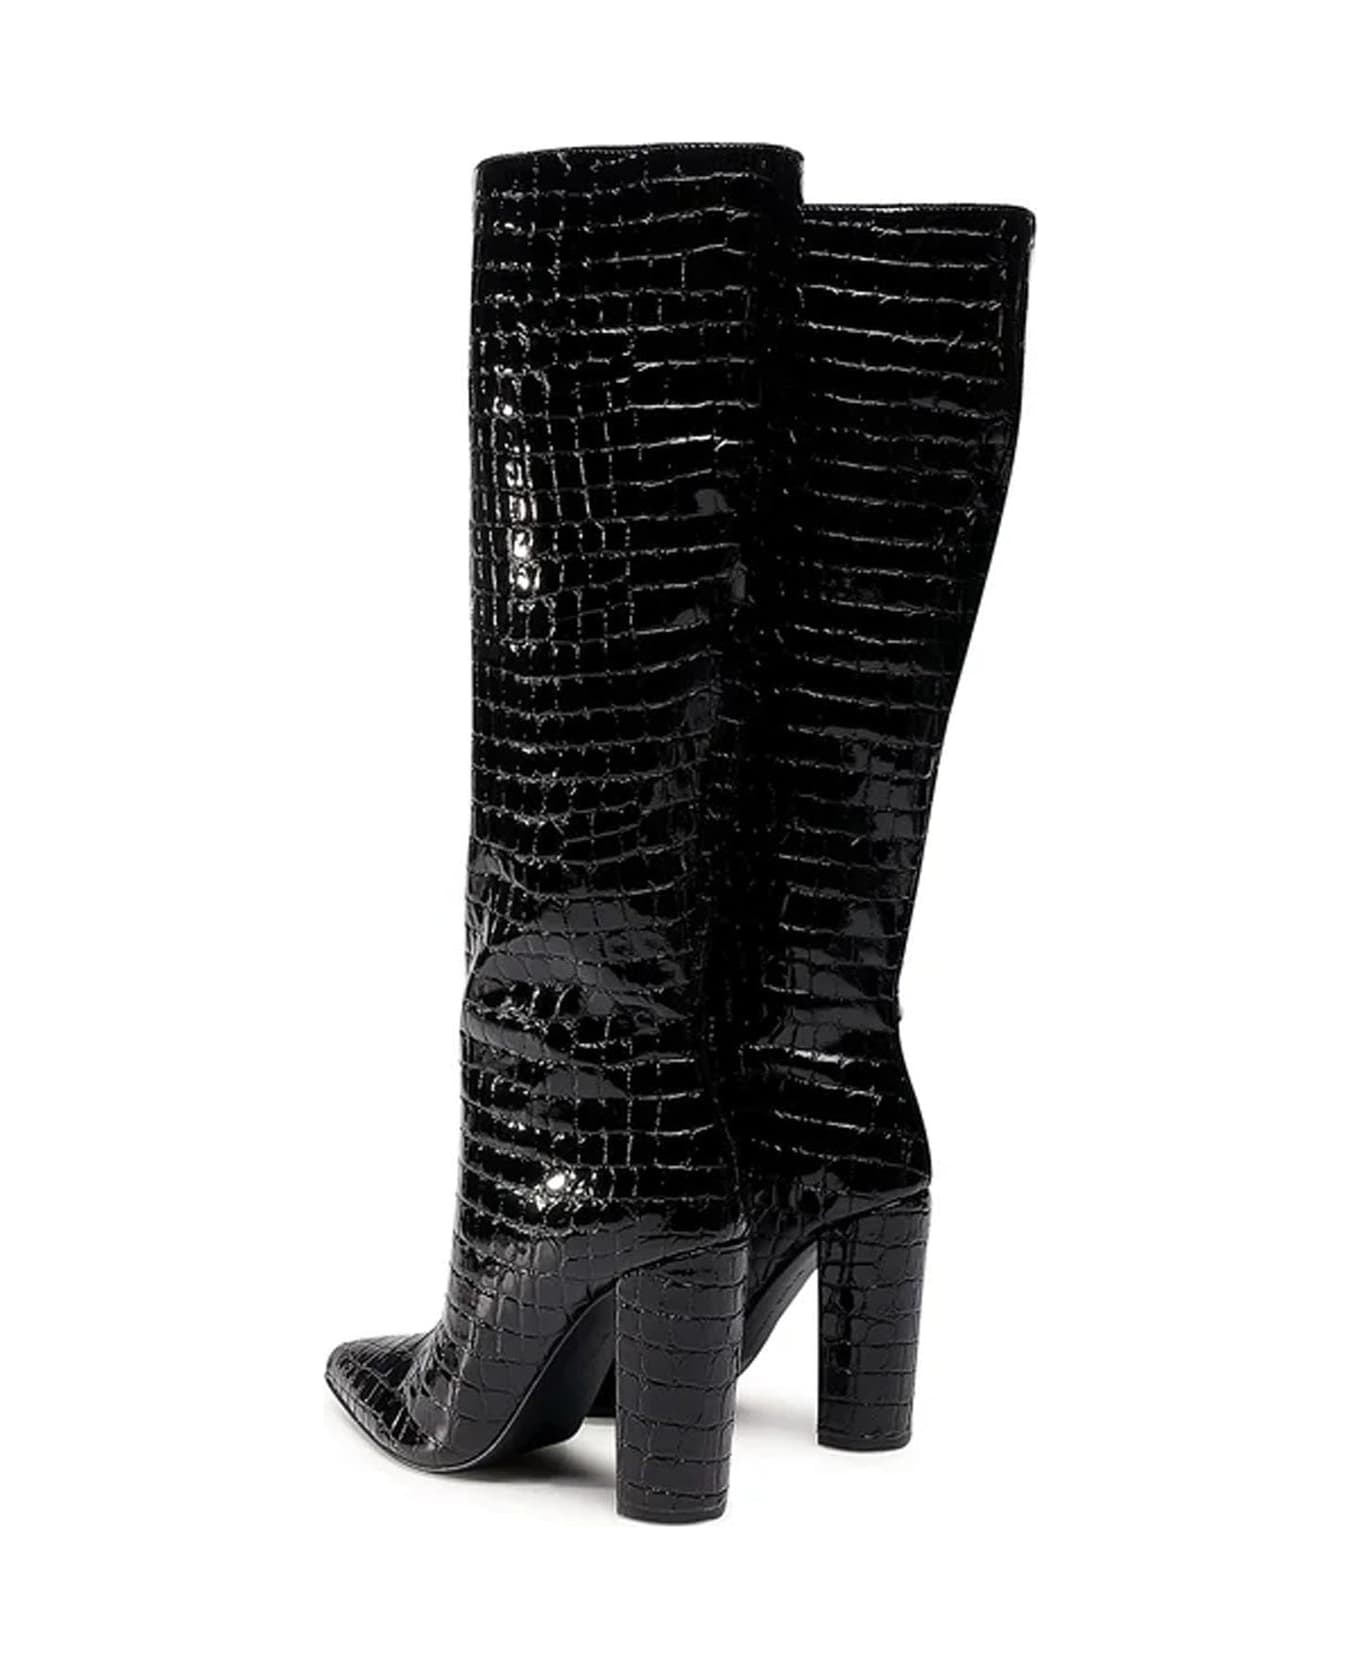 Steve Madden Leather Boots - Black